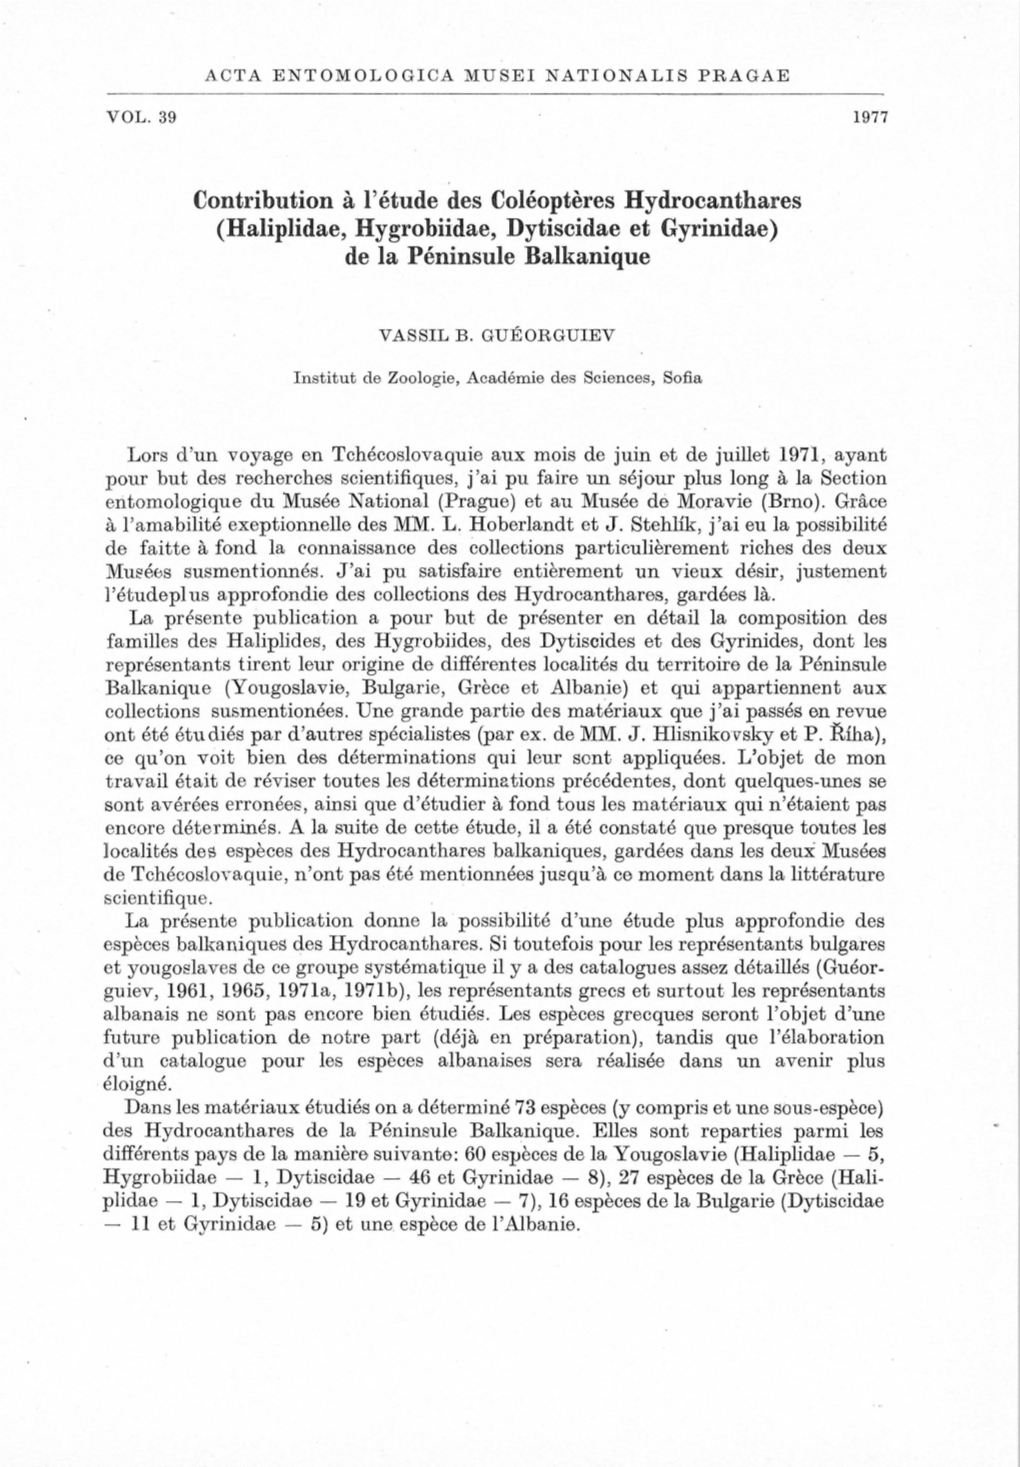 Haliplidae, Hygrobiidae, Dytiscidae Et Gyrinidae) De La Peninsule Balkanique